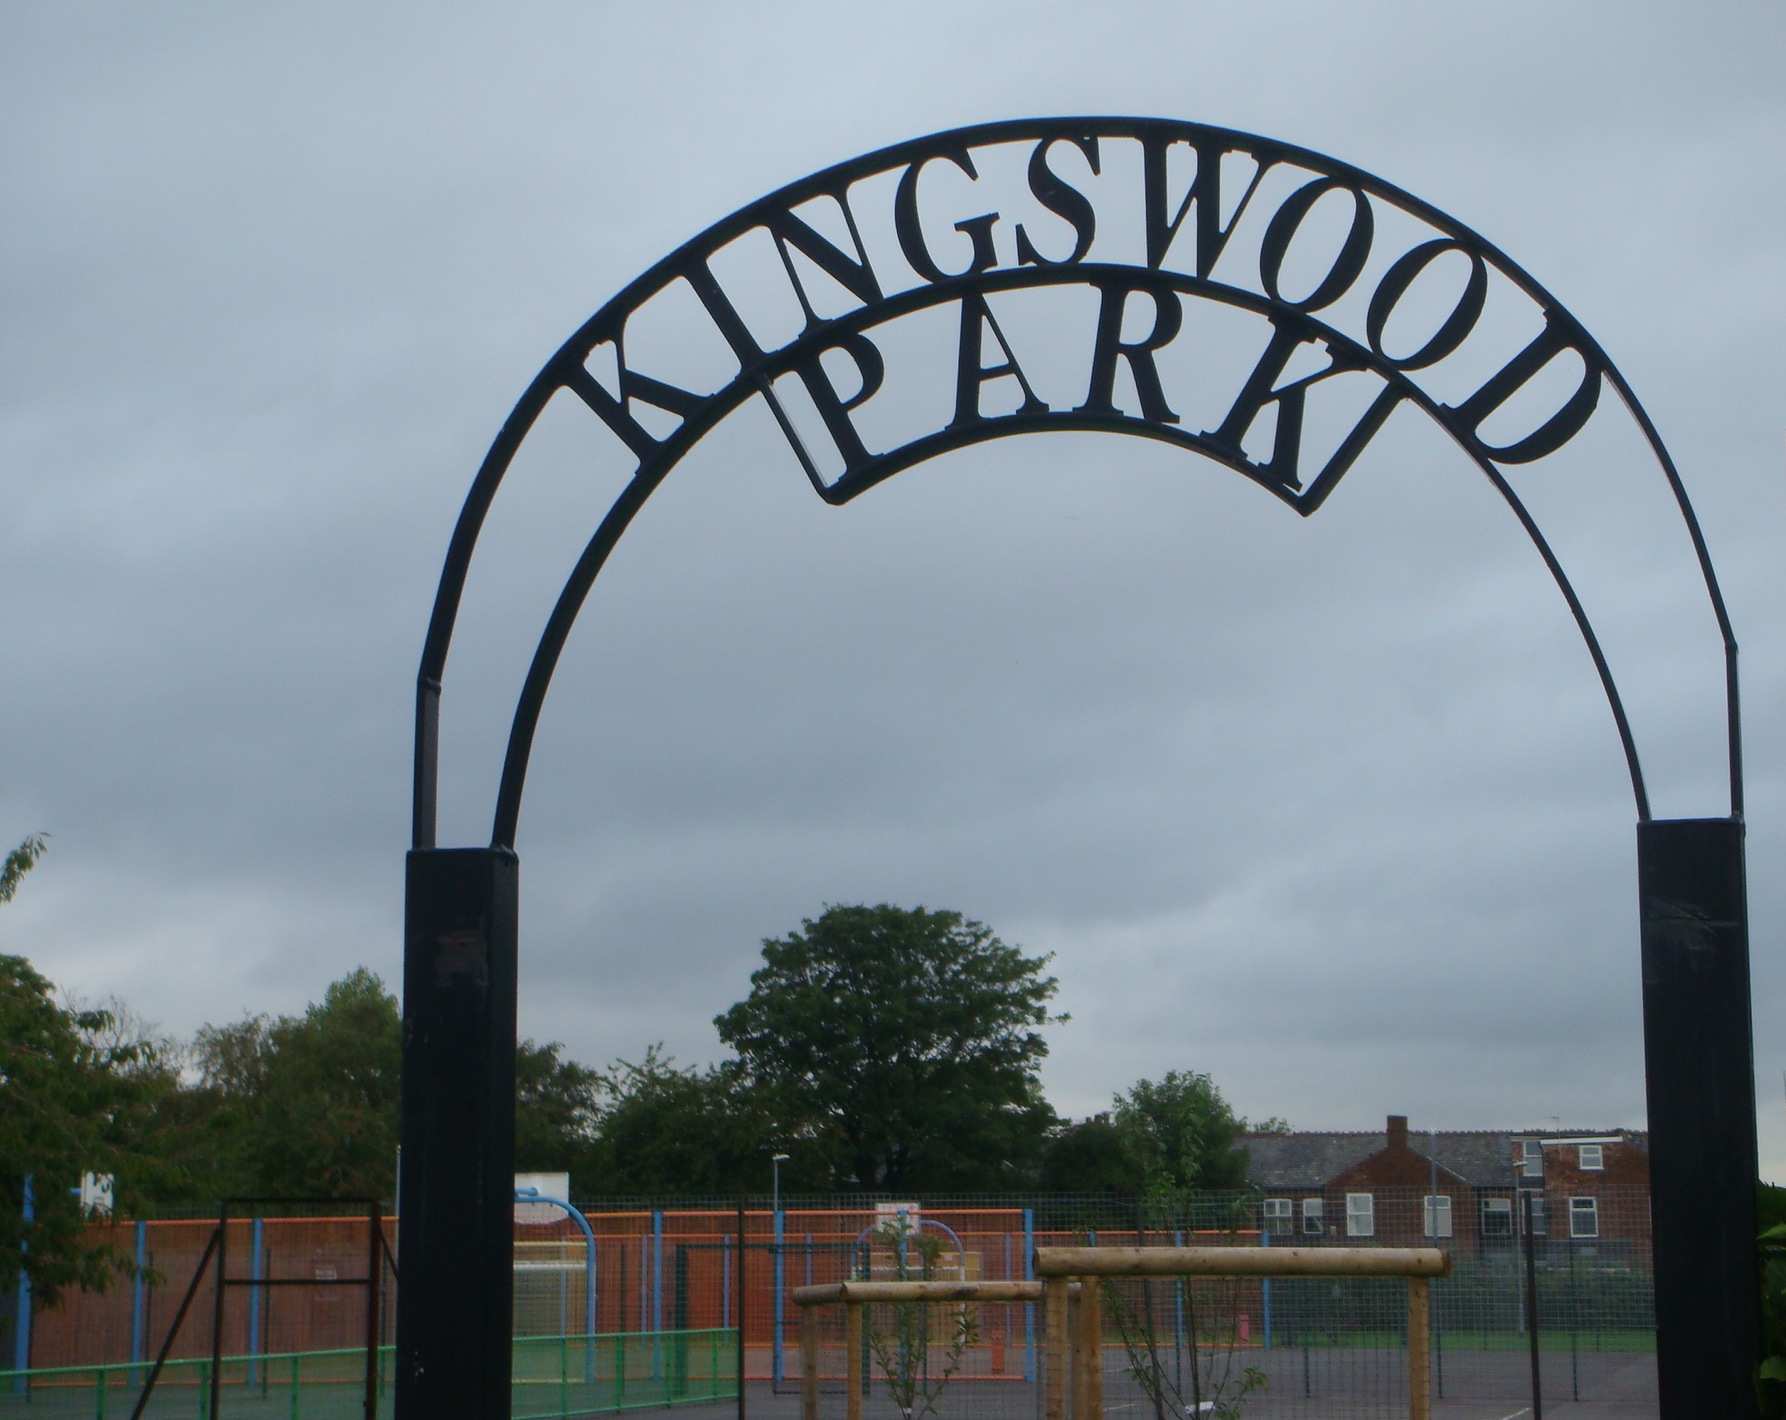 Kingswood Park, Ladybarn, Manchester